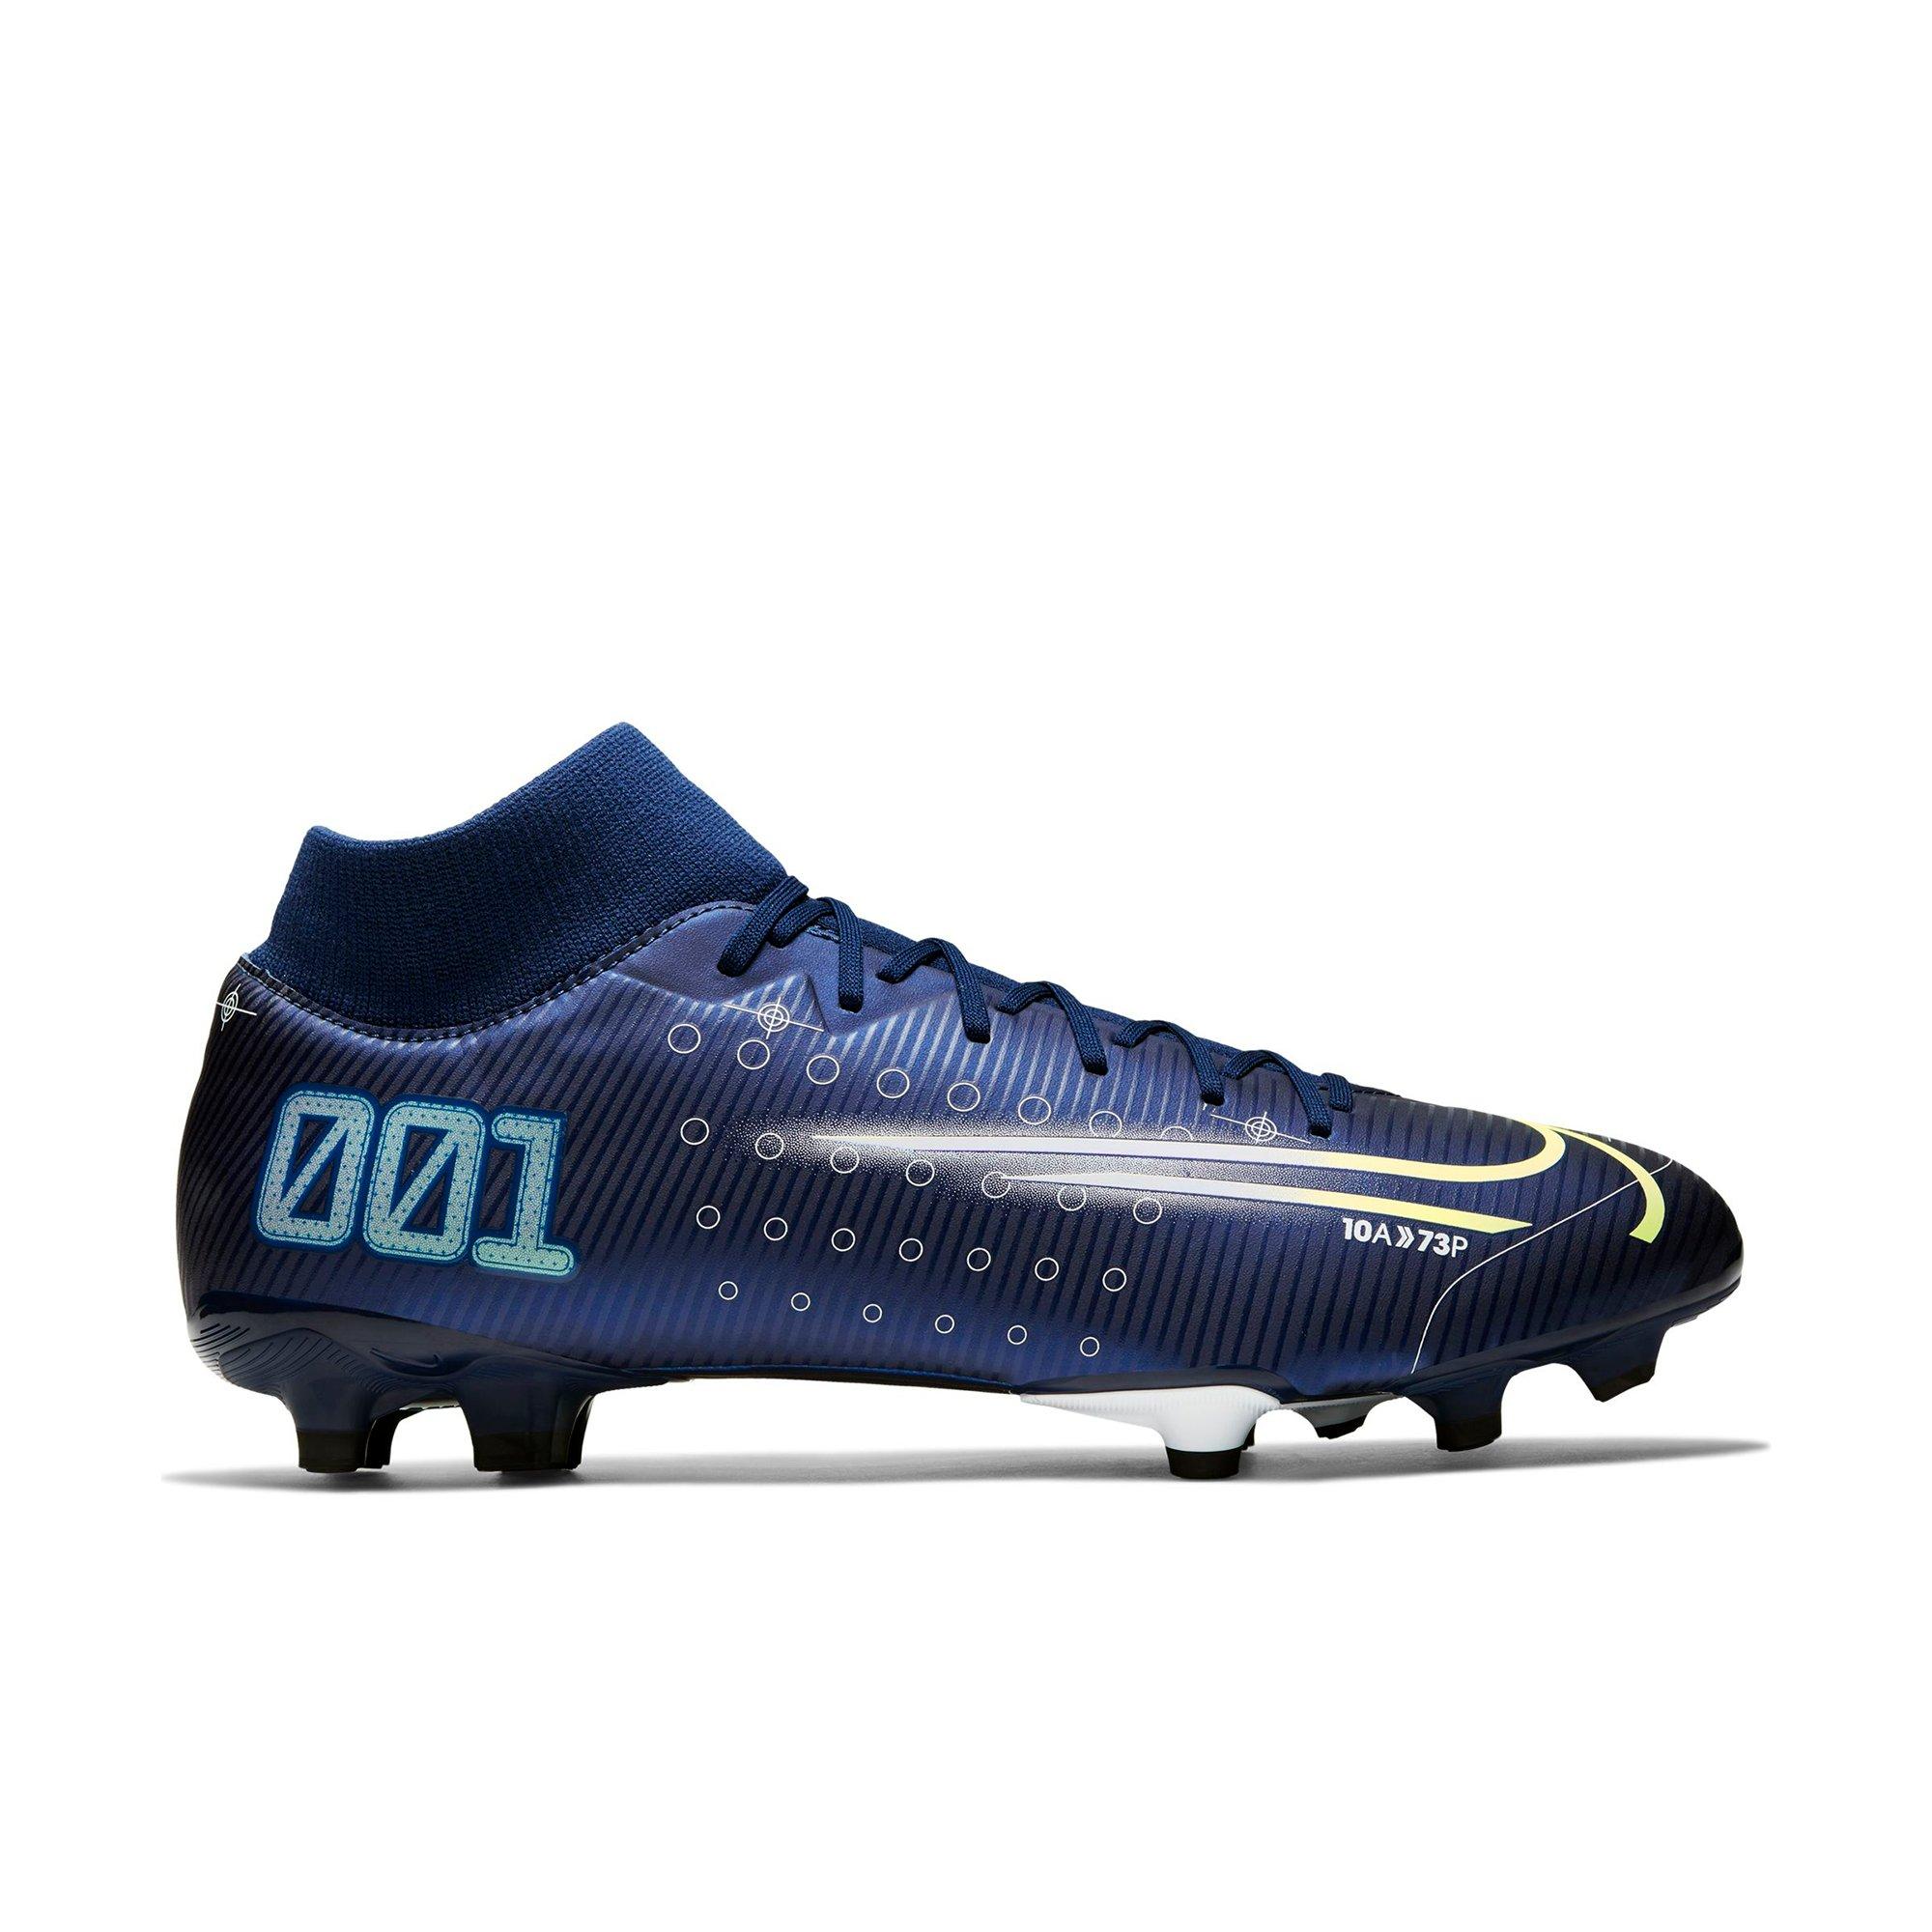 mercurial soccer boots